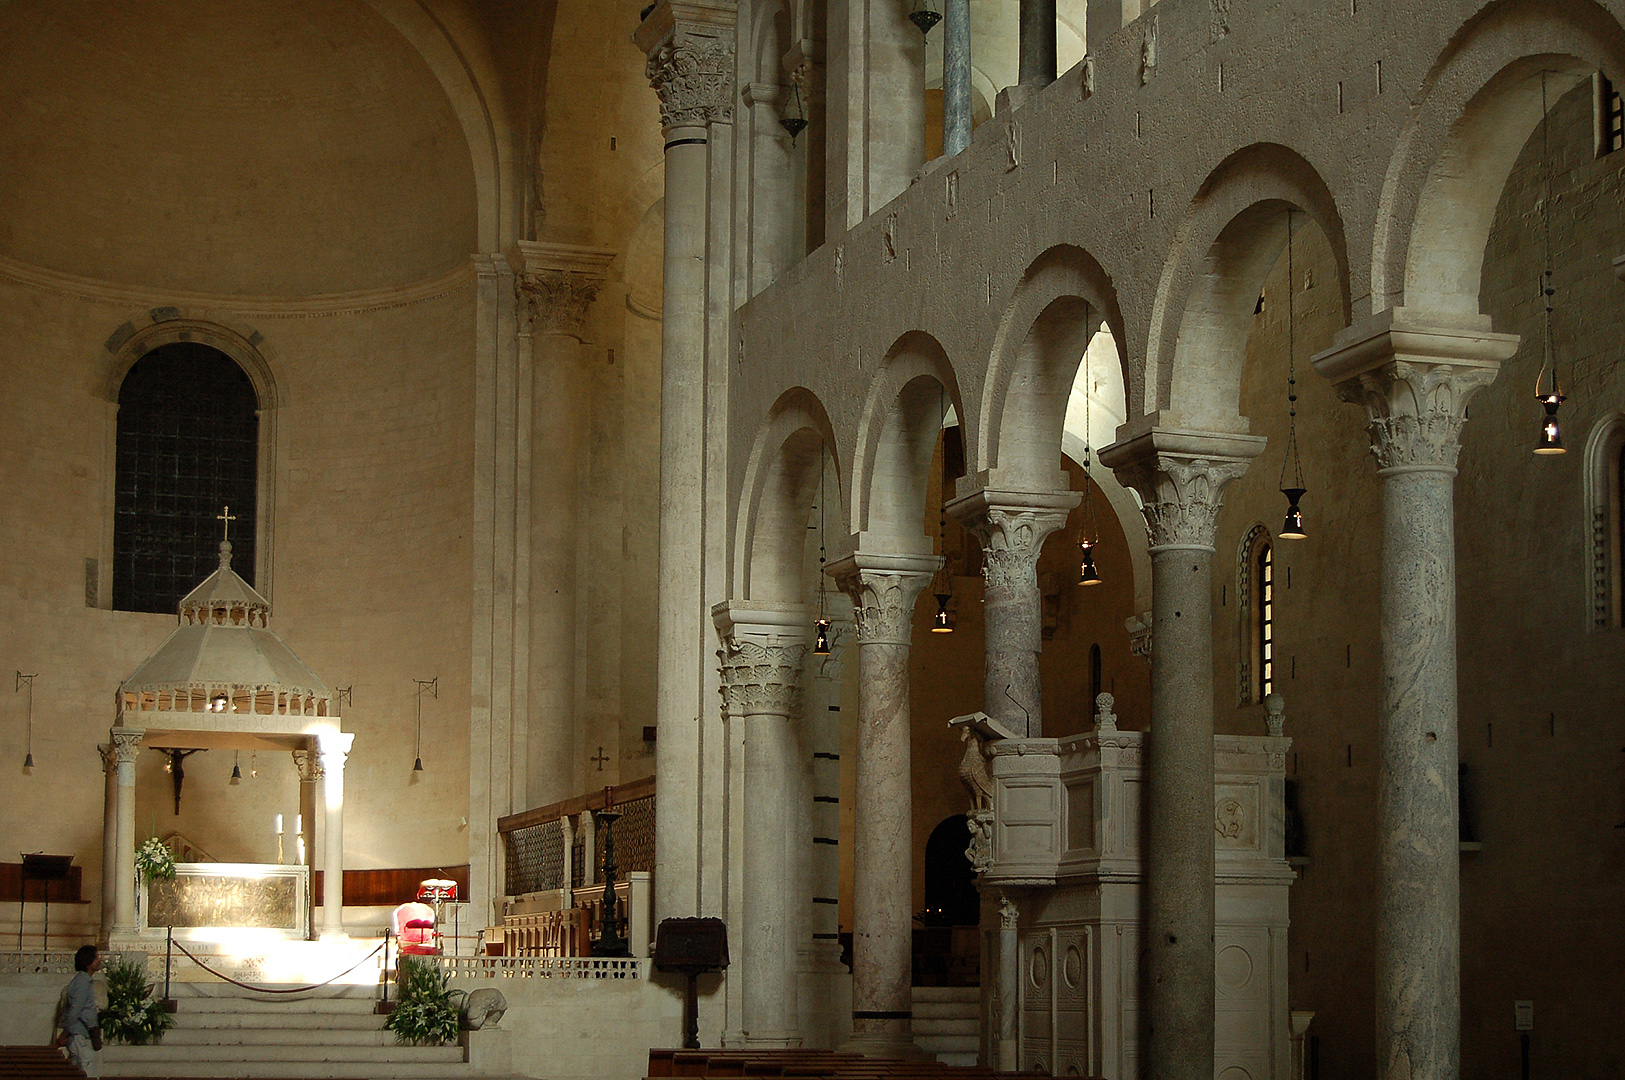 Kathedraal van Bari (Apuli, Itali); Bari Cathedral (Apulia, Italy)